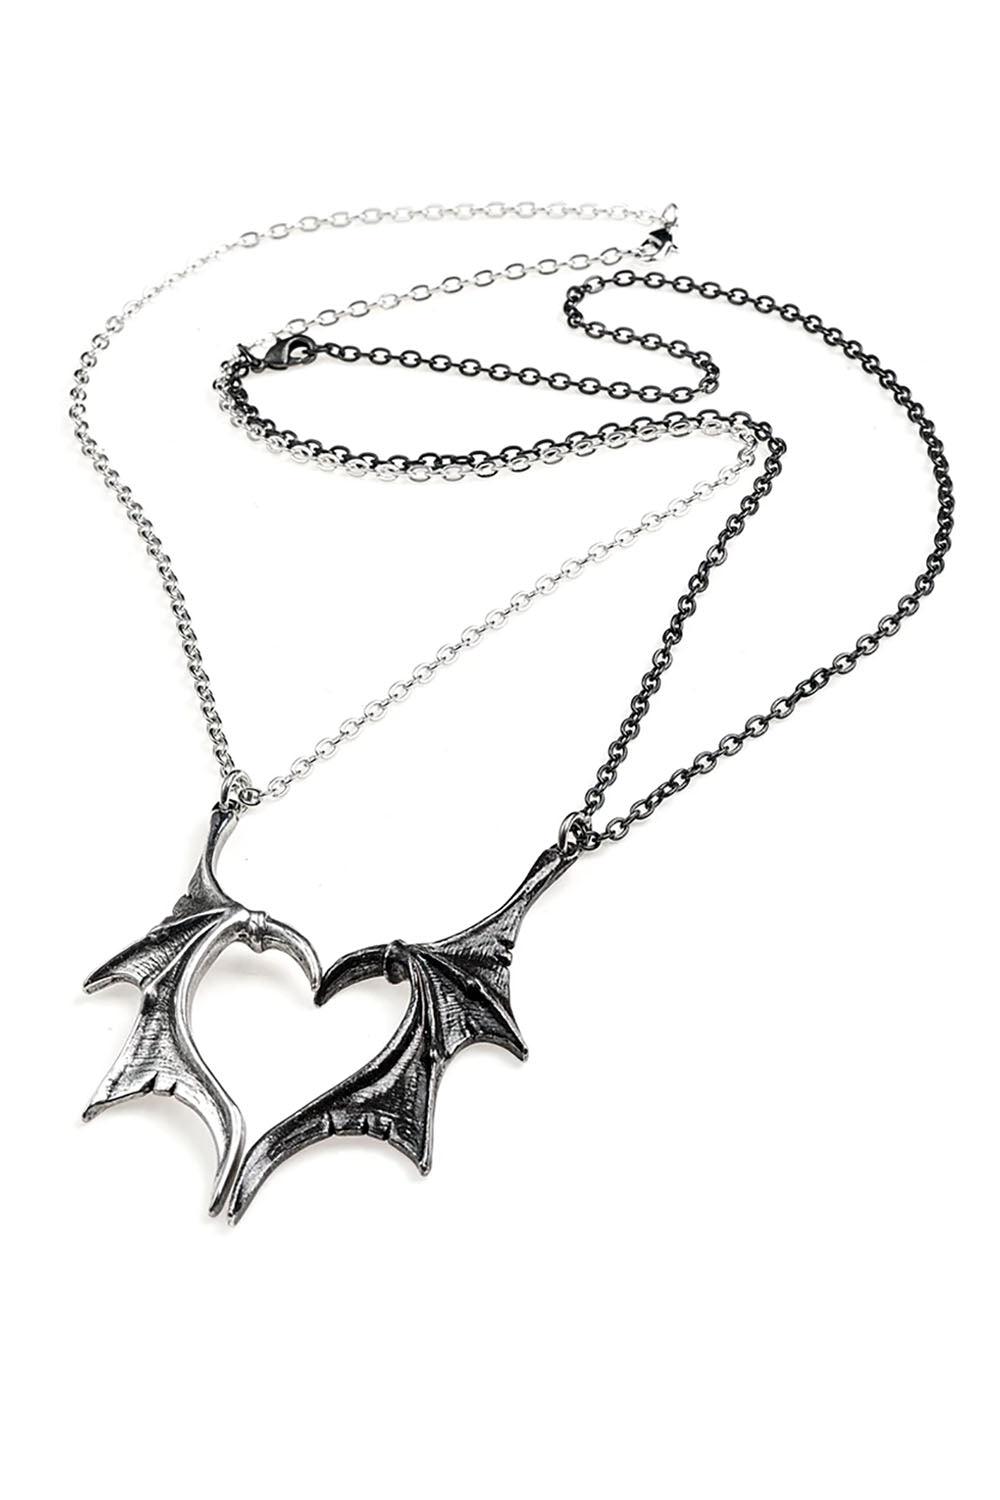 Alchemy Darkling Heart Necklaces [Pair] - VampireFreaks